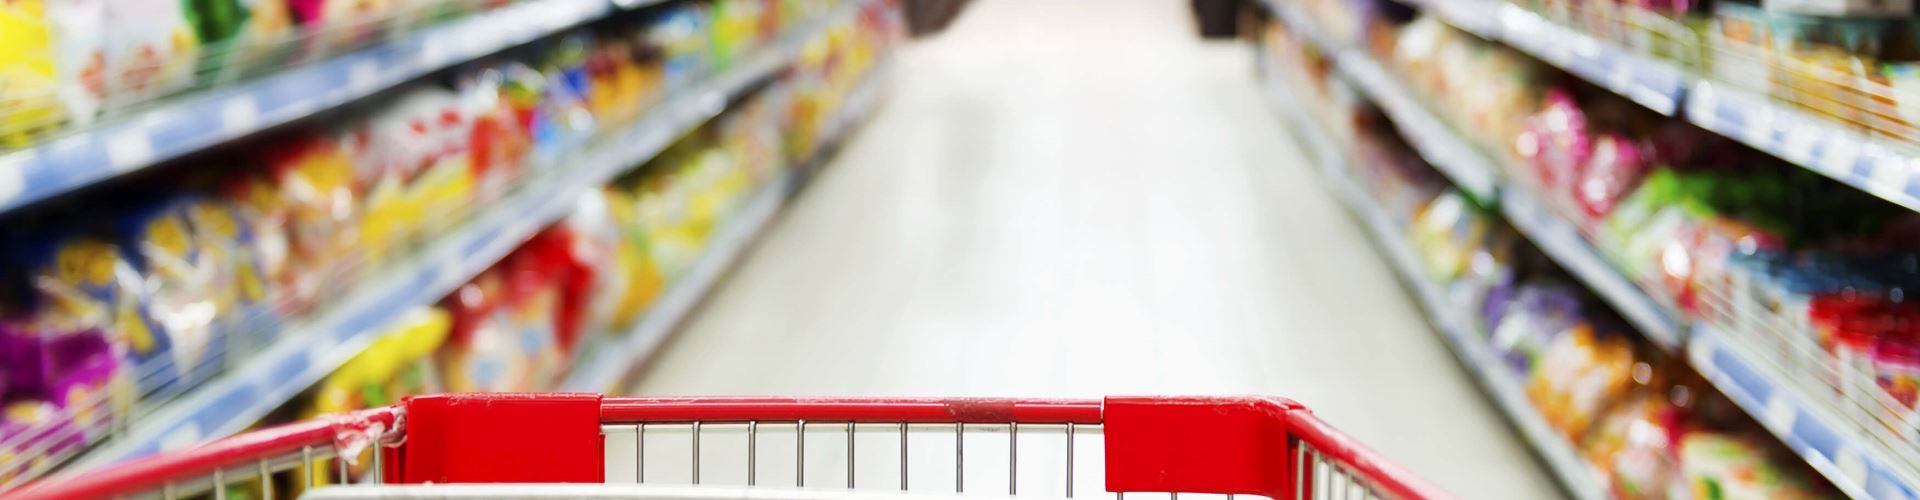 Changing consumer behaviour hits UK supermarkets